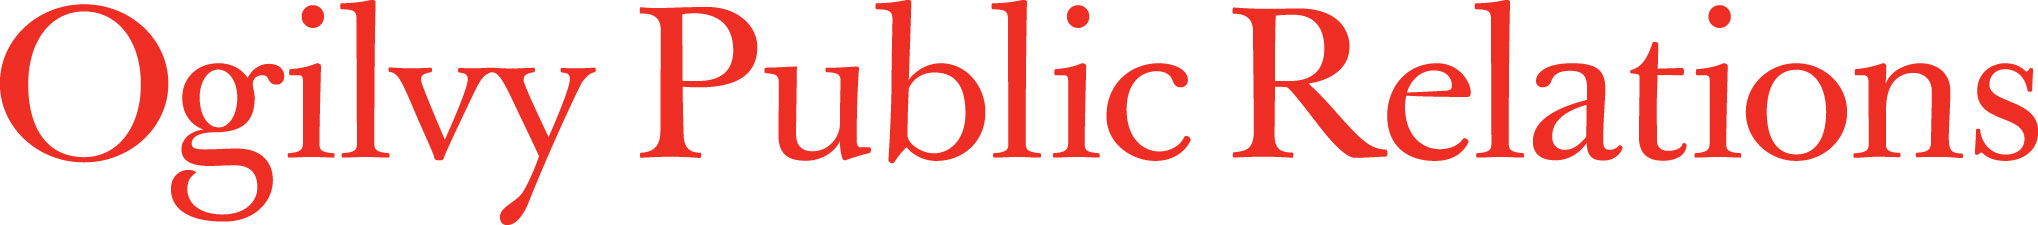  Leading Online Public Relations Company Logo: Ogilvy Public Relations